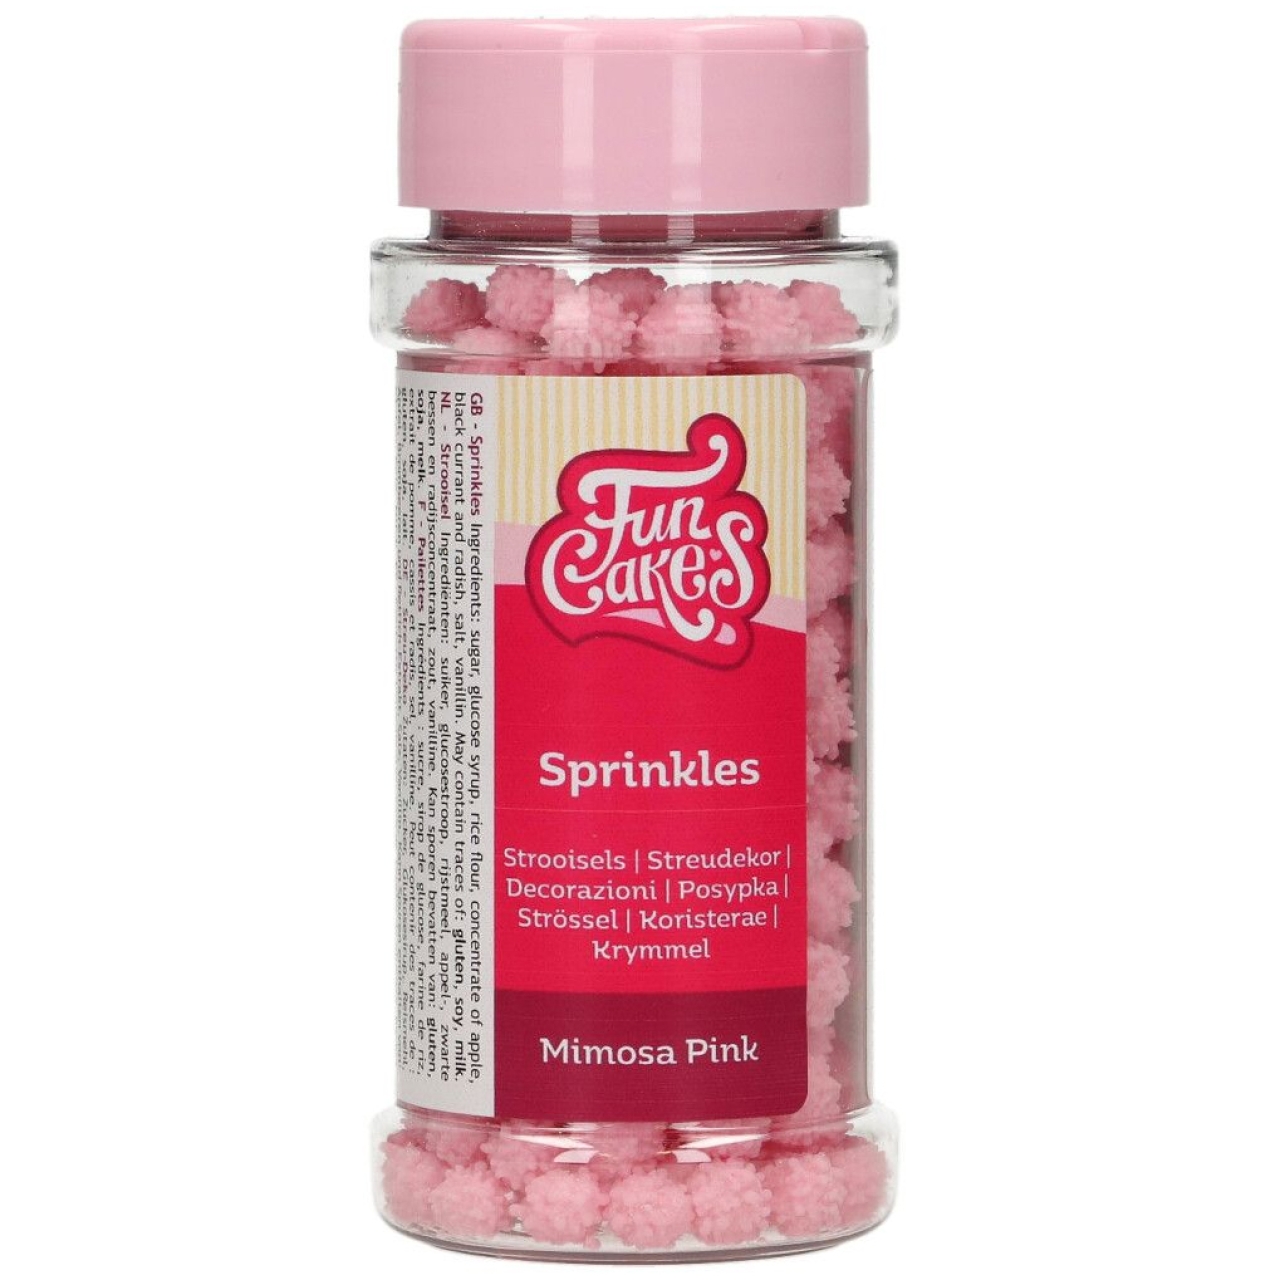 Mimosen Pink Sprinkles 45 g